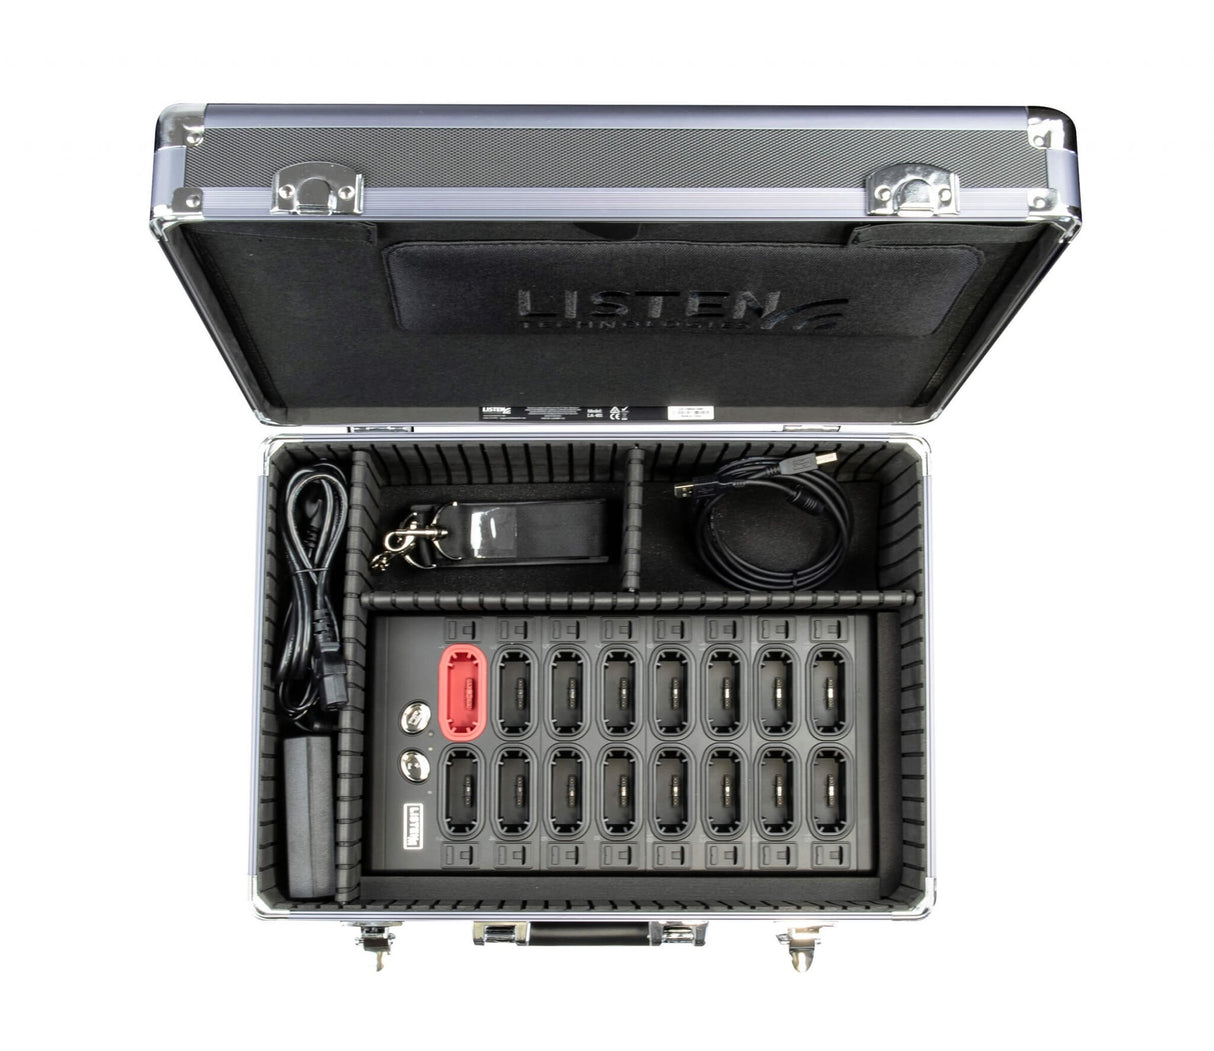 Listen LA-481-01 equipment case Hard shell case Chrome, Grey